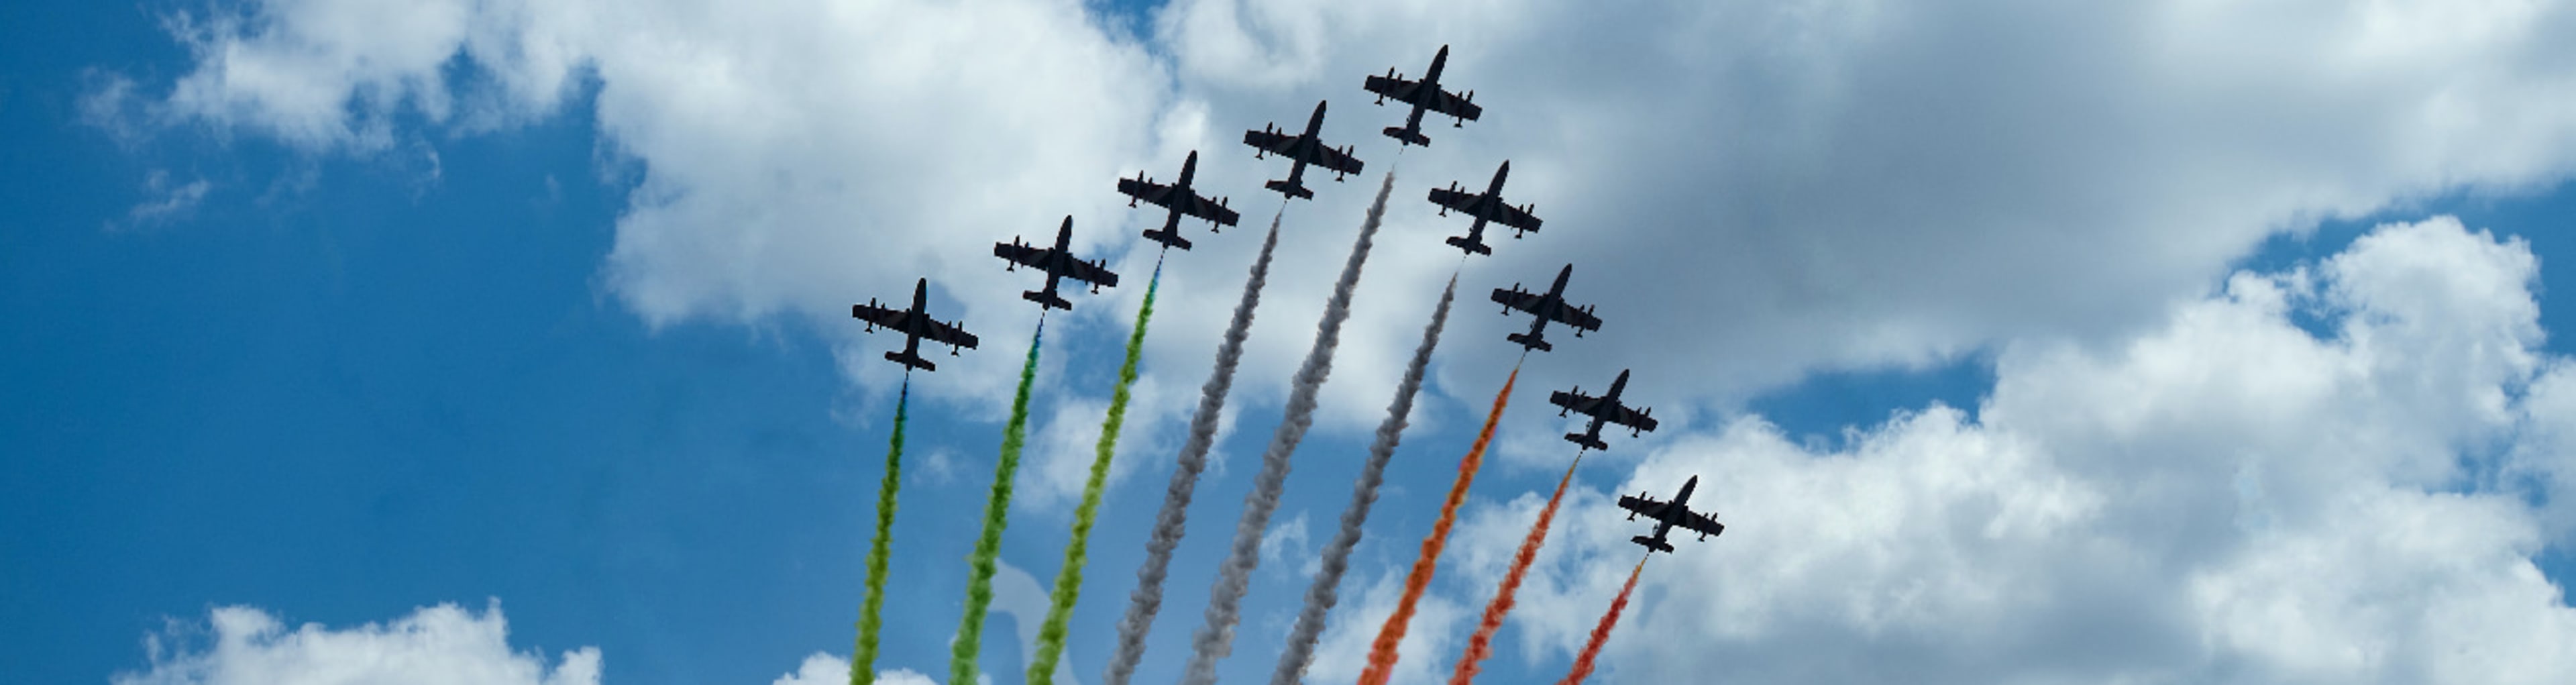 Italian National Republic Day Air Show